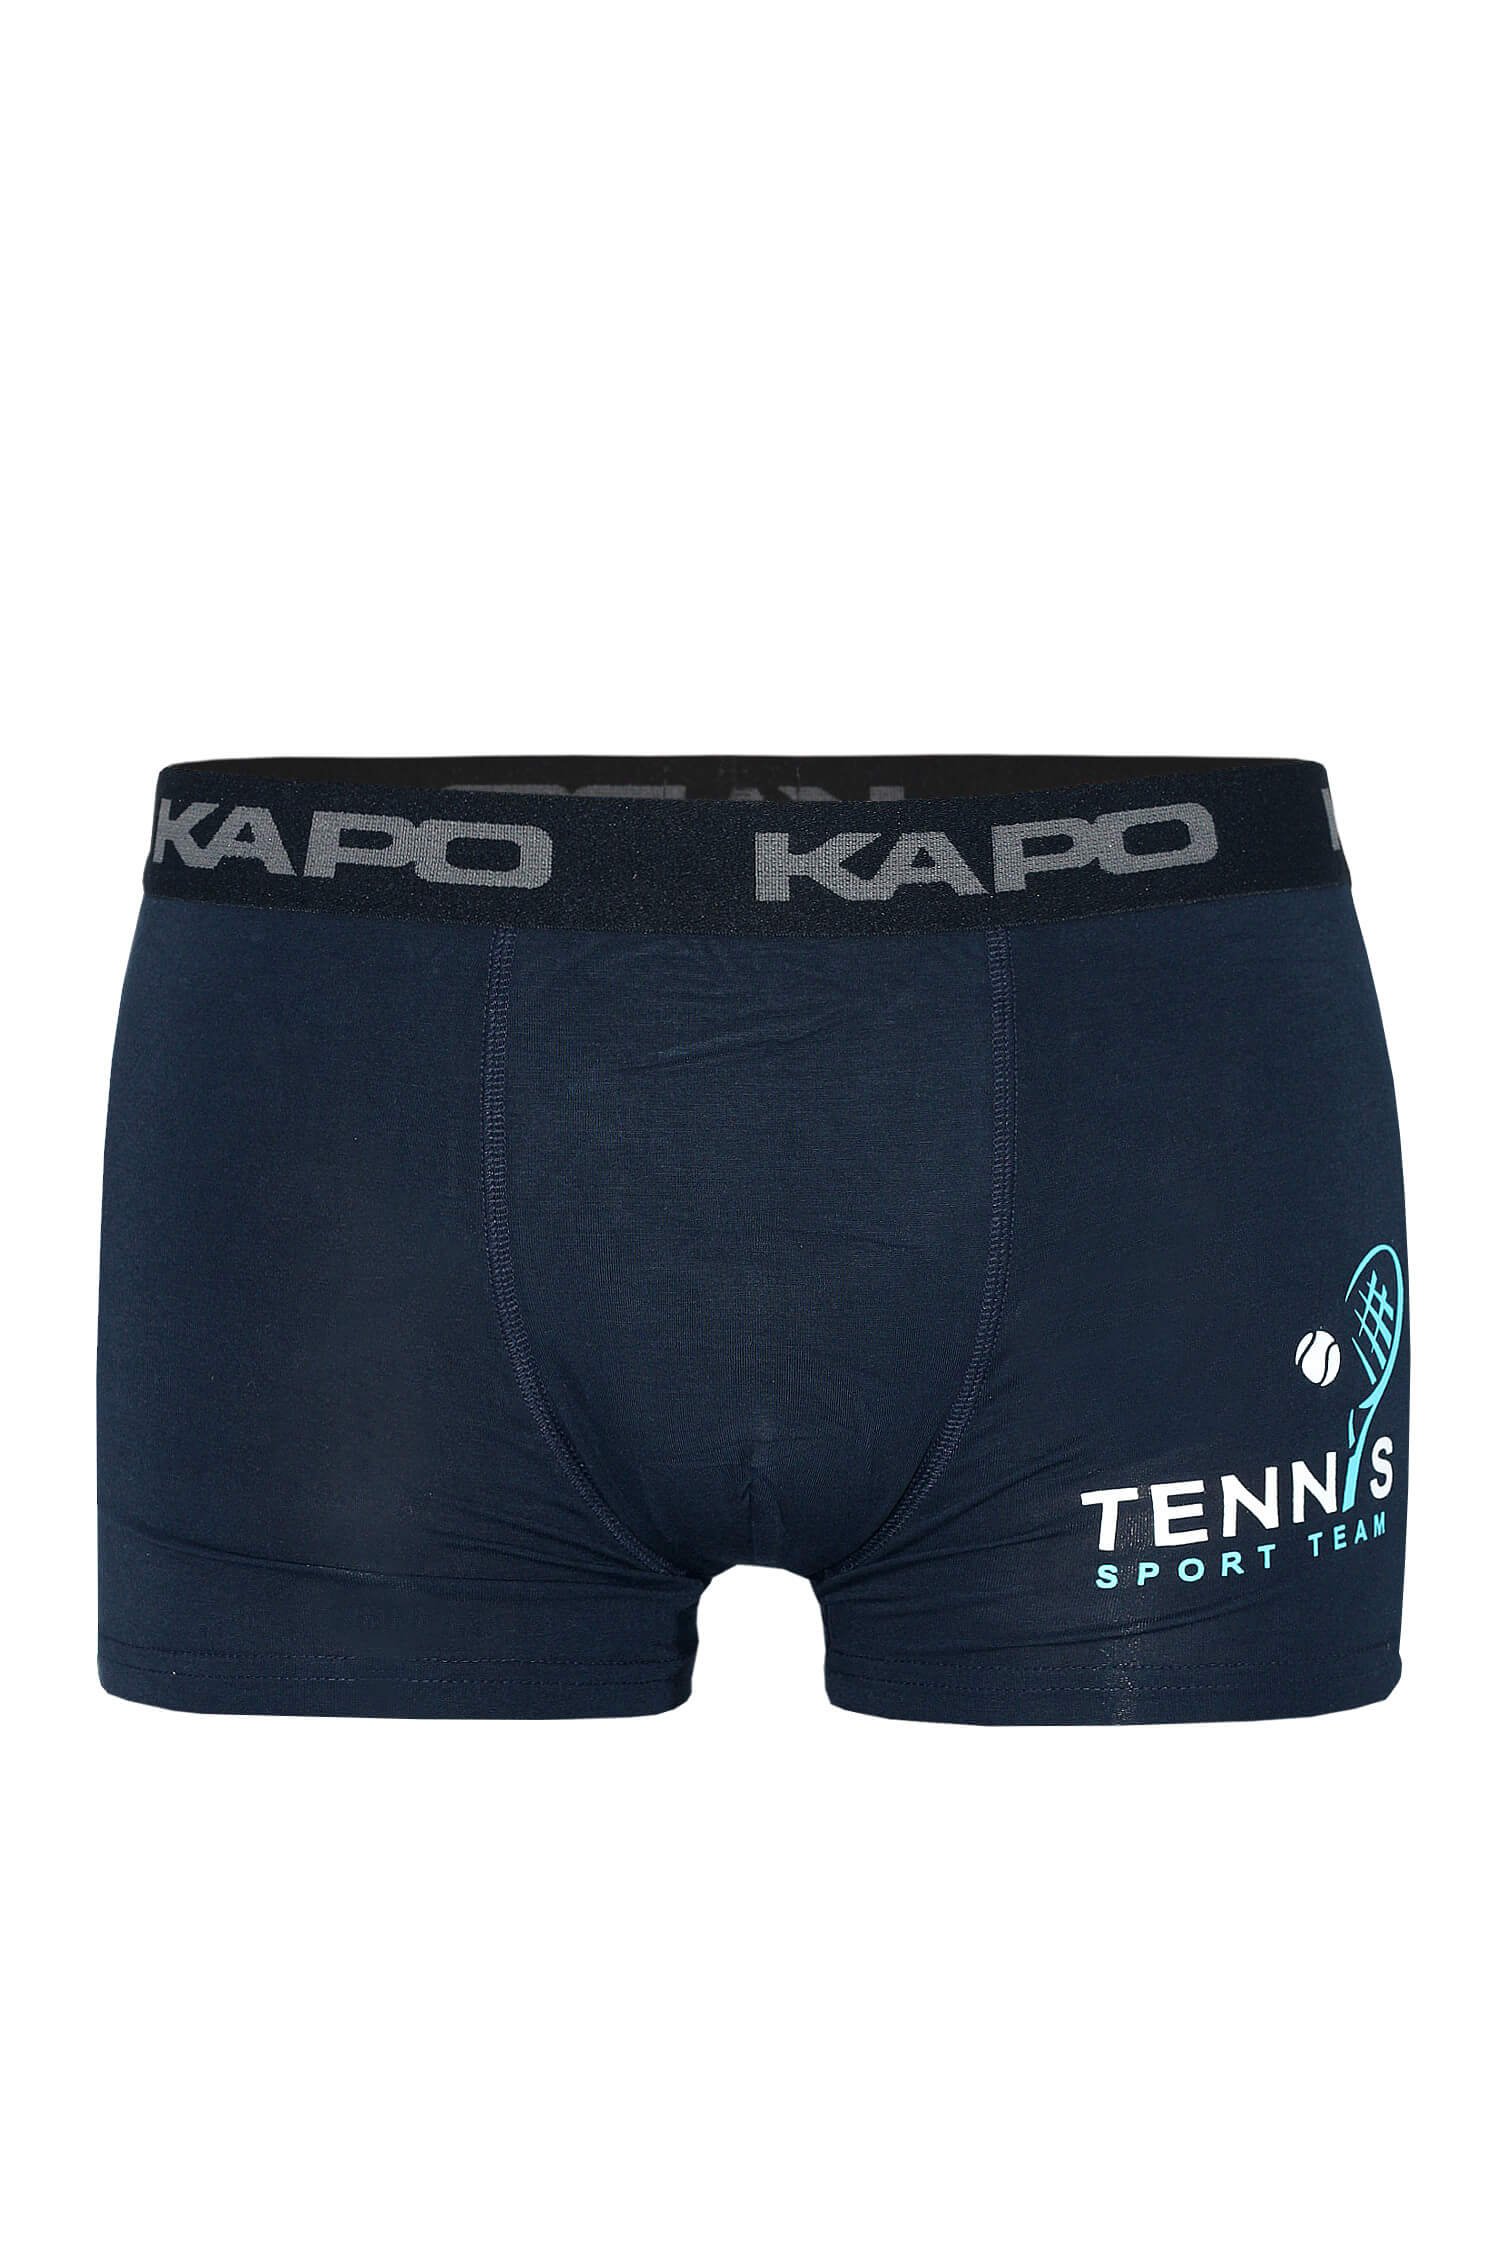 Rafael Kapo tenis boxerky XXL tmavě modrá